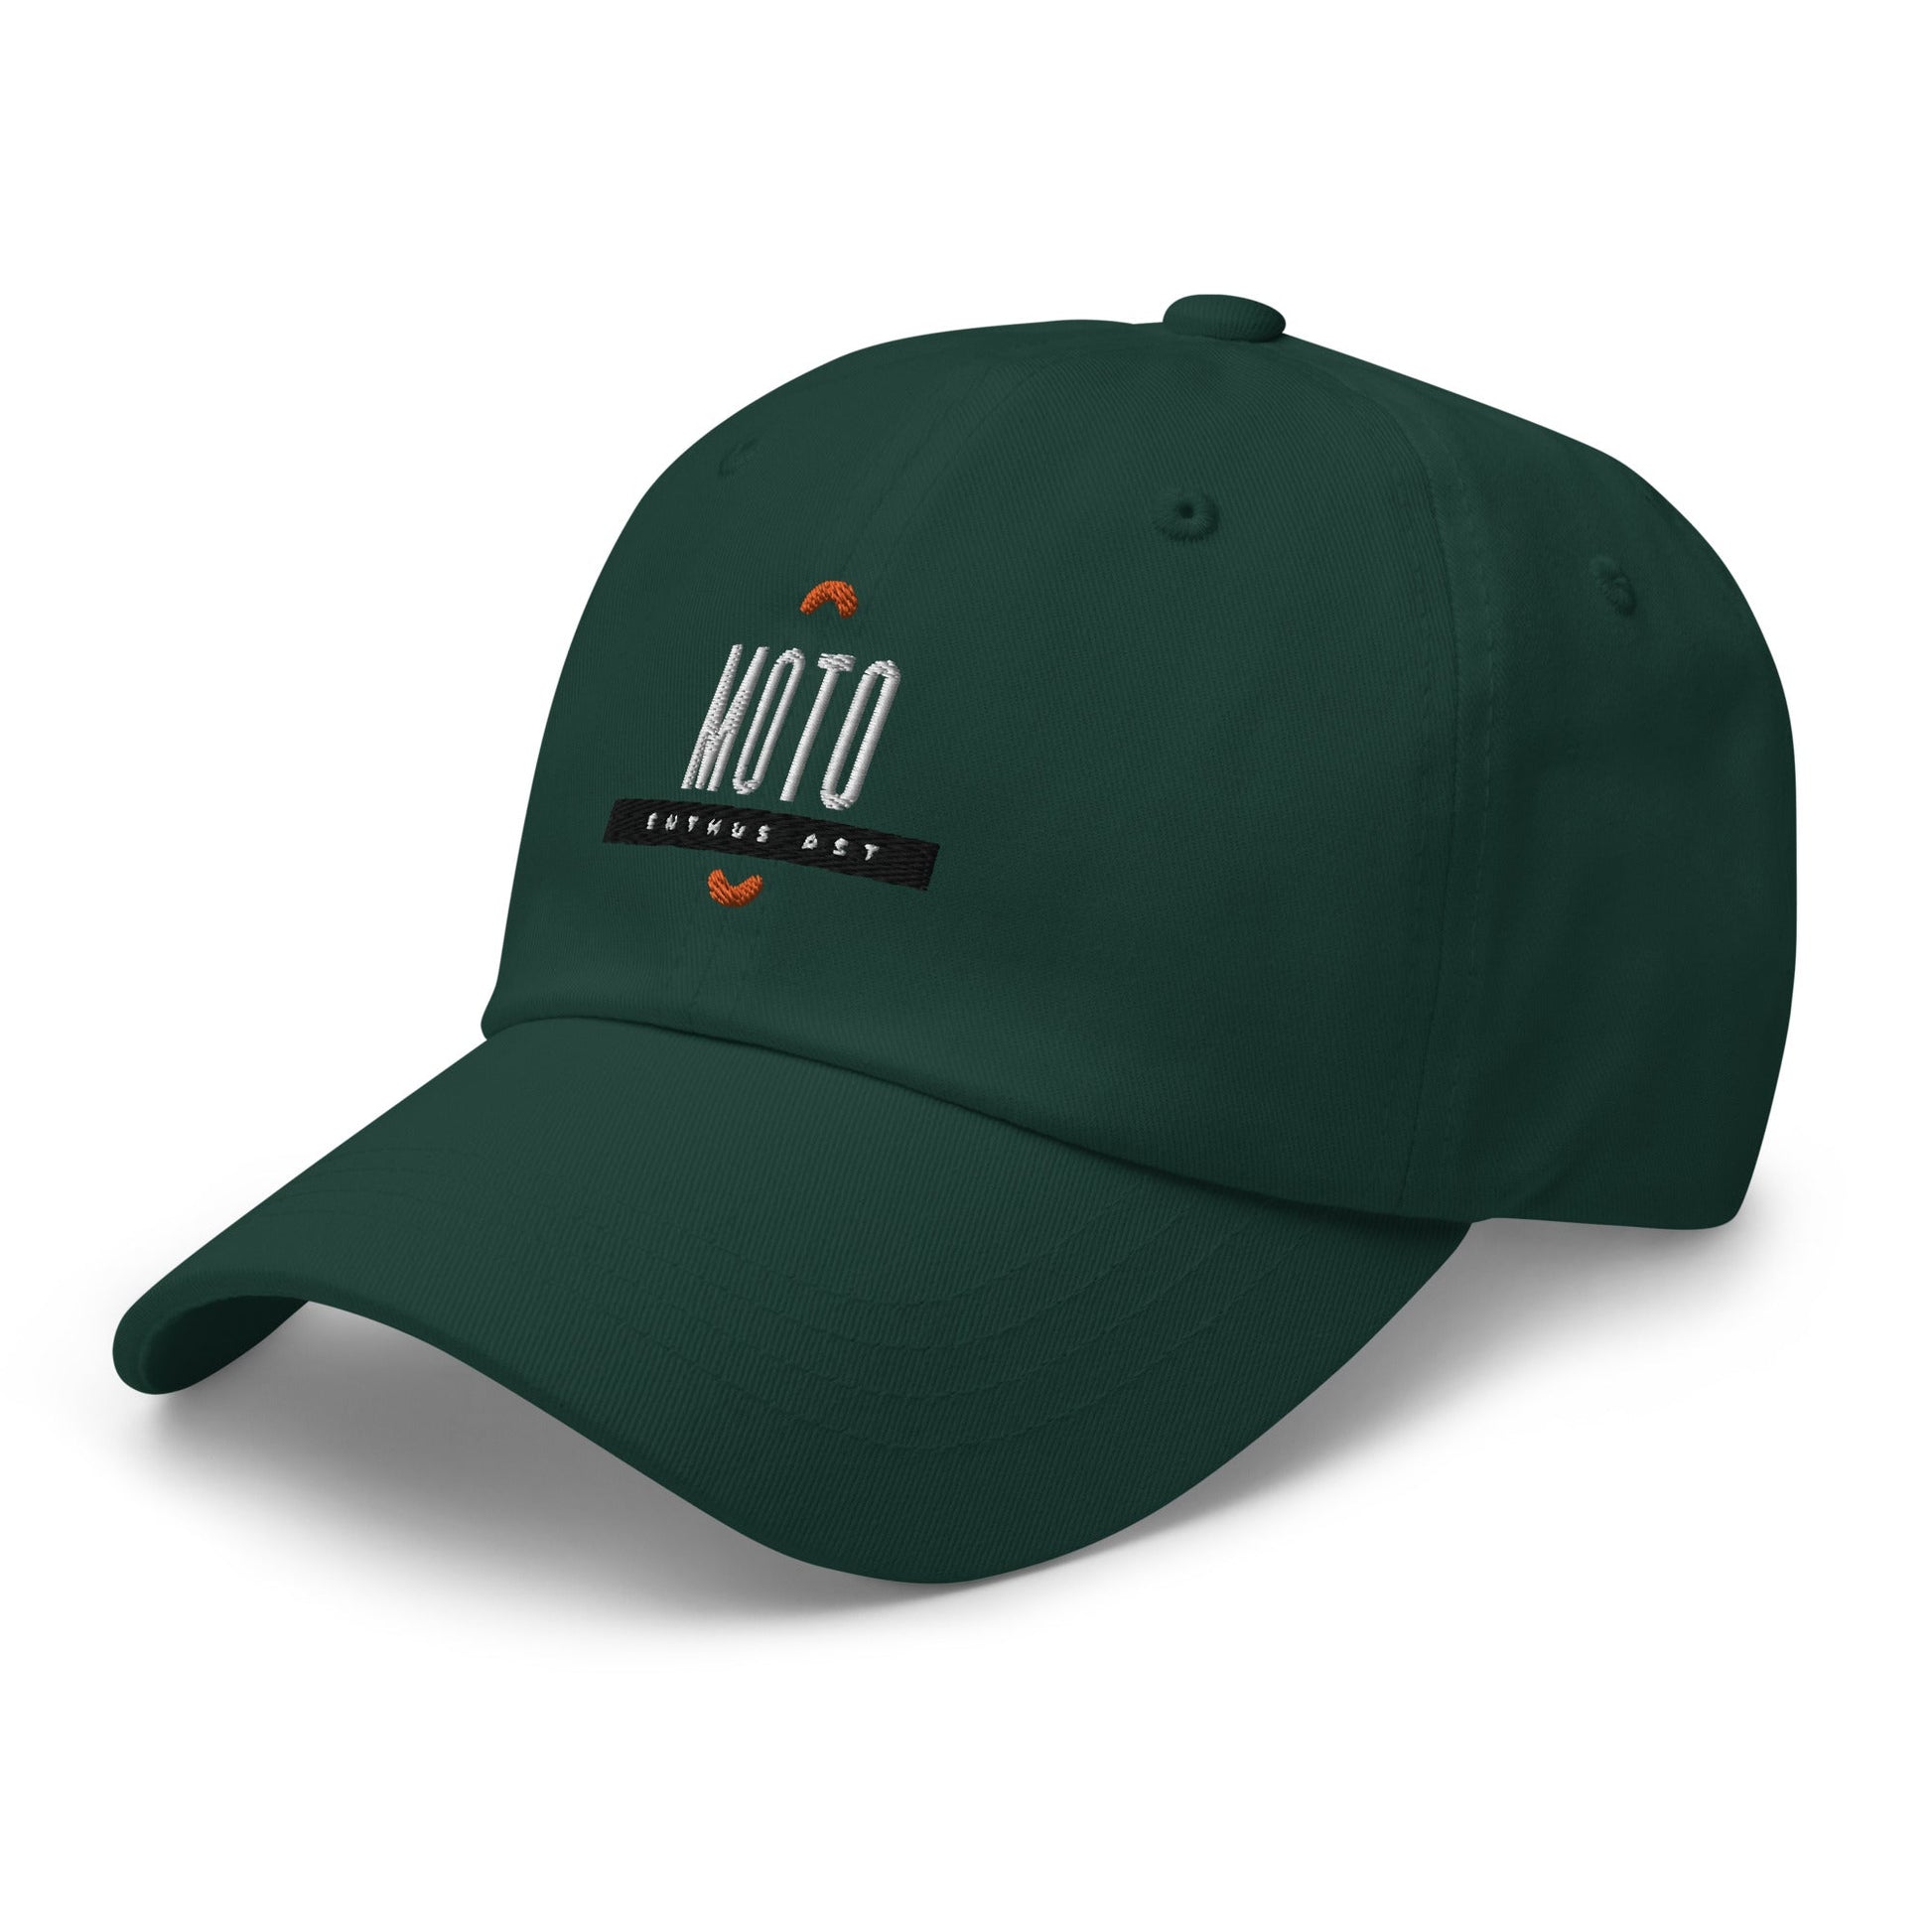 Hat - Moto Enthusiast - The Vandi Company